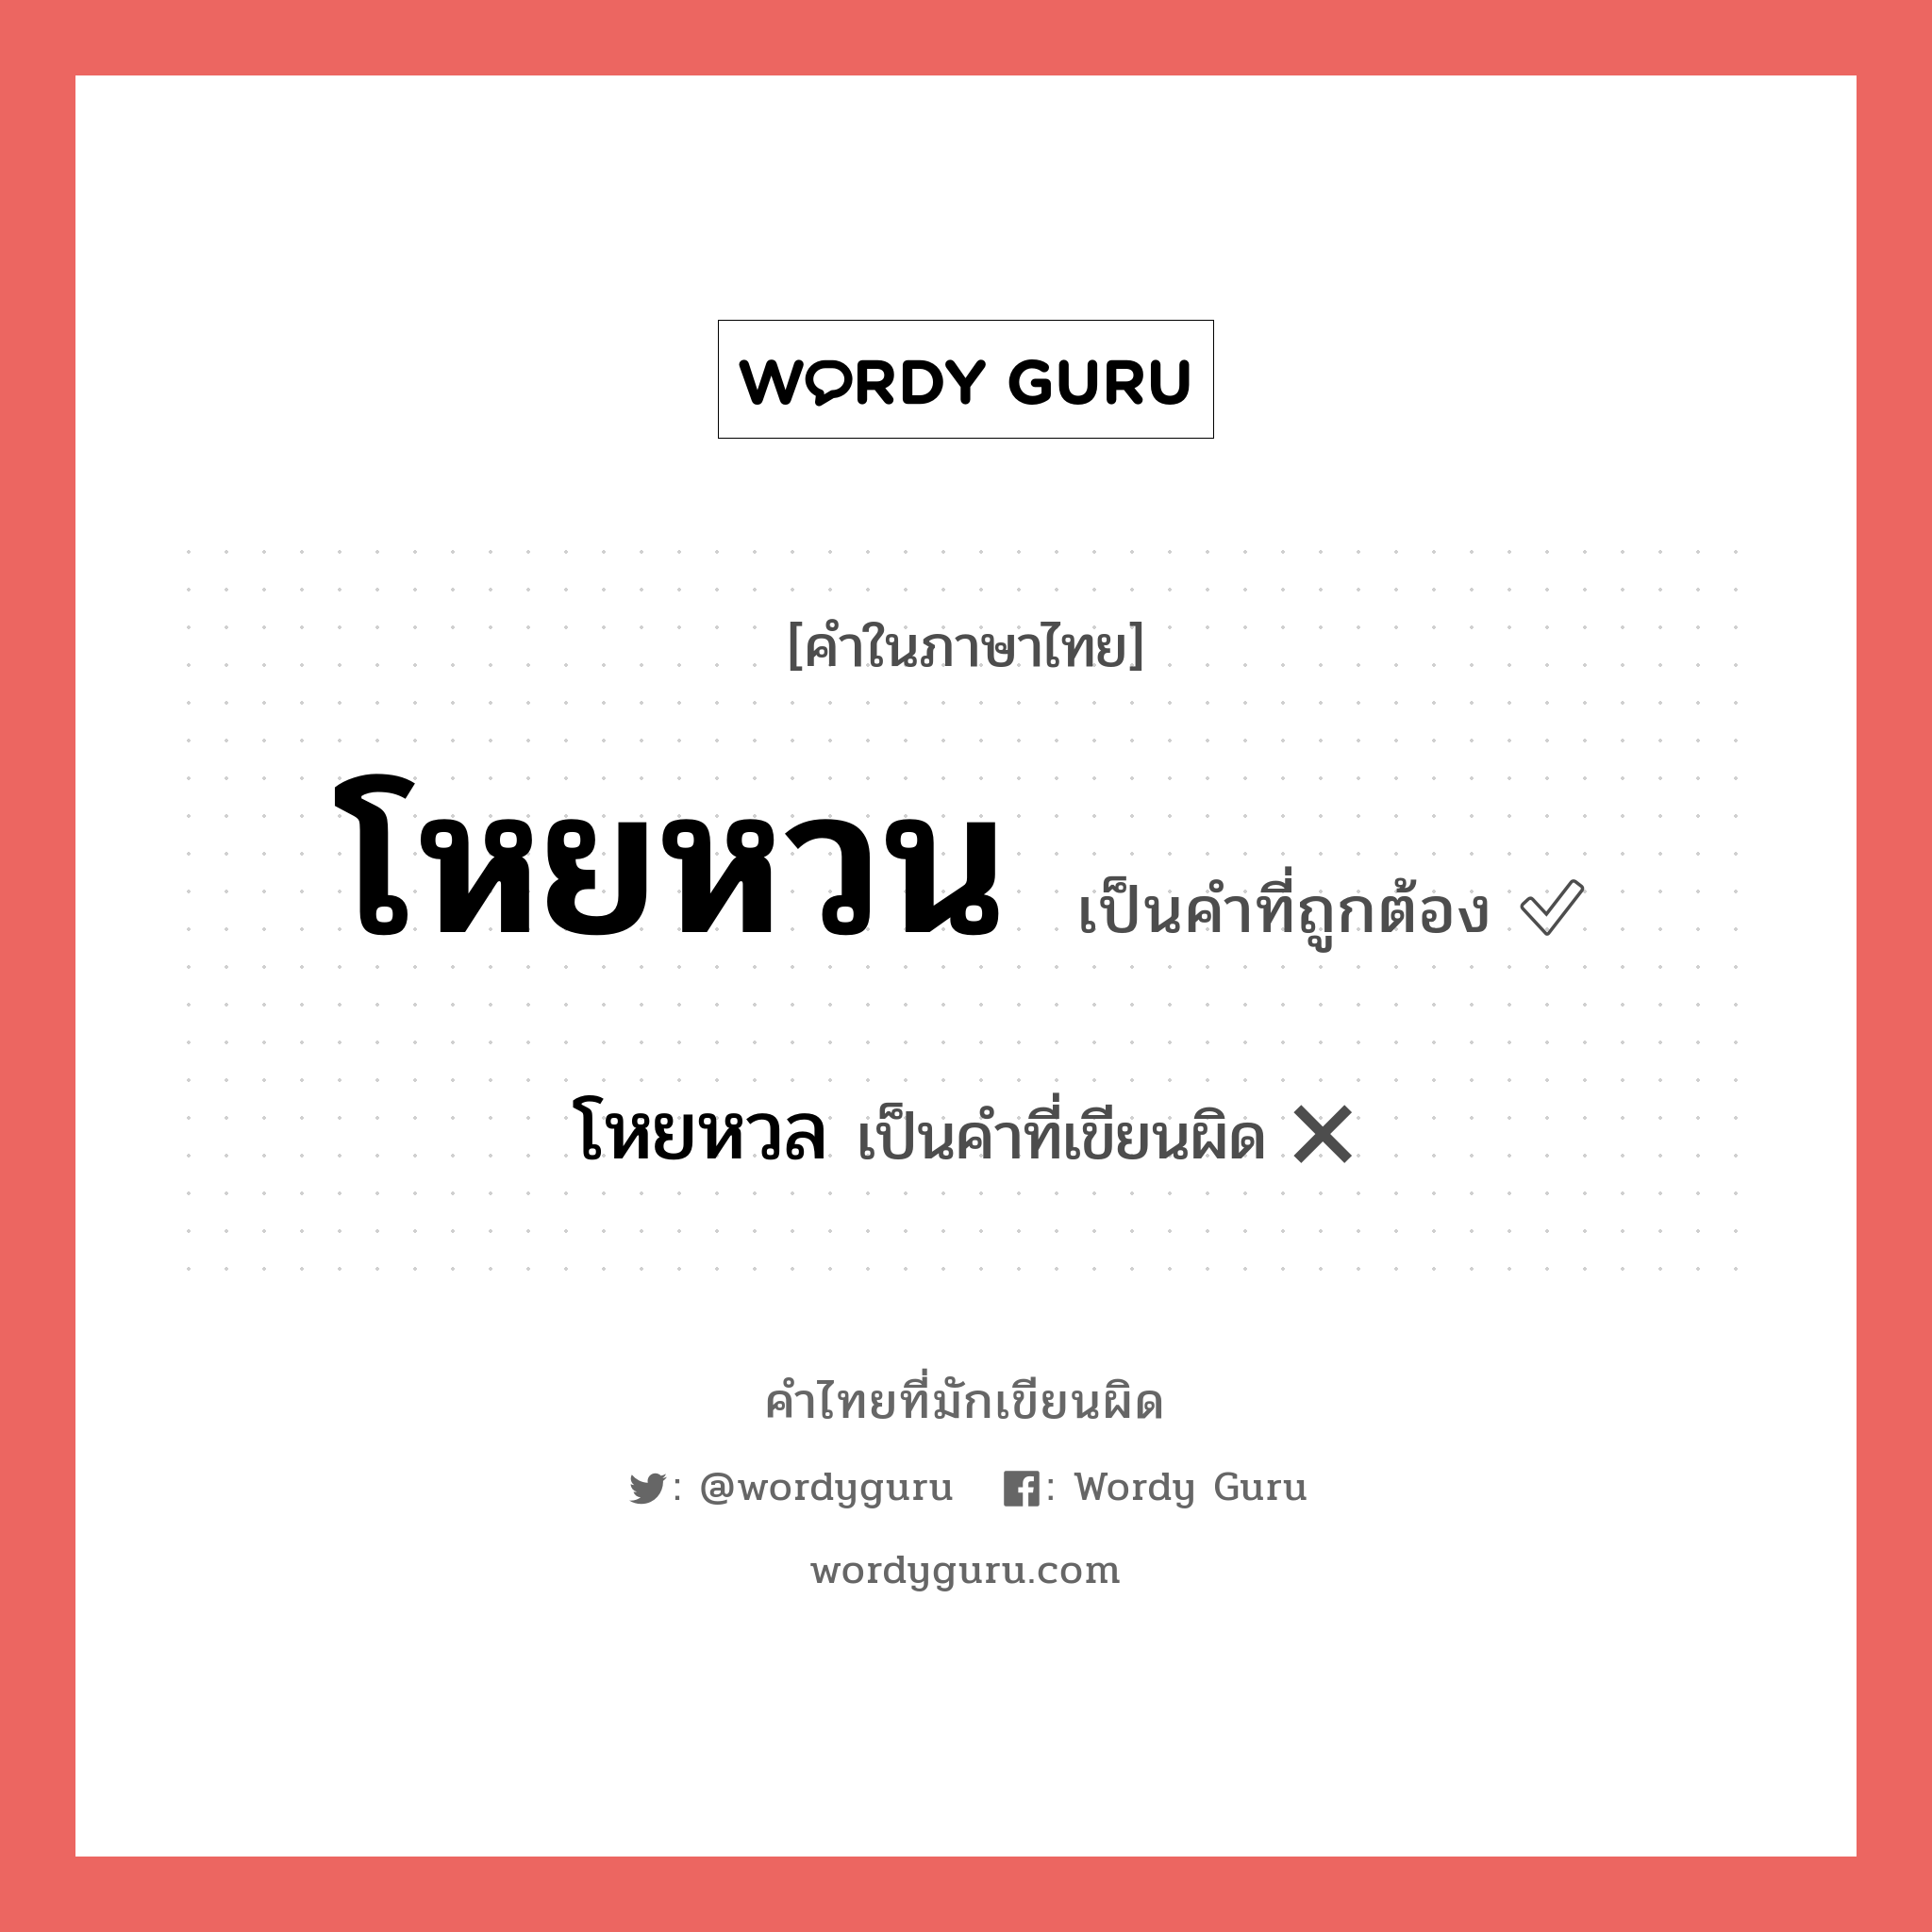 โหยหวล หรือ โหยหวน คำไหนเขียนถูก?, คำในภาษาไทยที่มักเขียนผิด โหยหวล คำที่ผิด ❌ โหยหวน